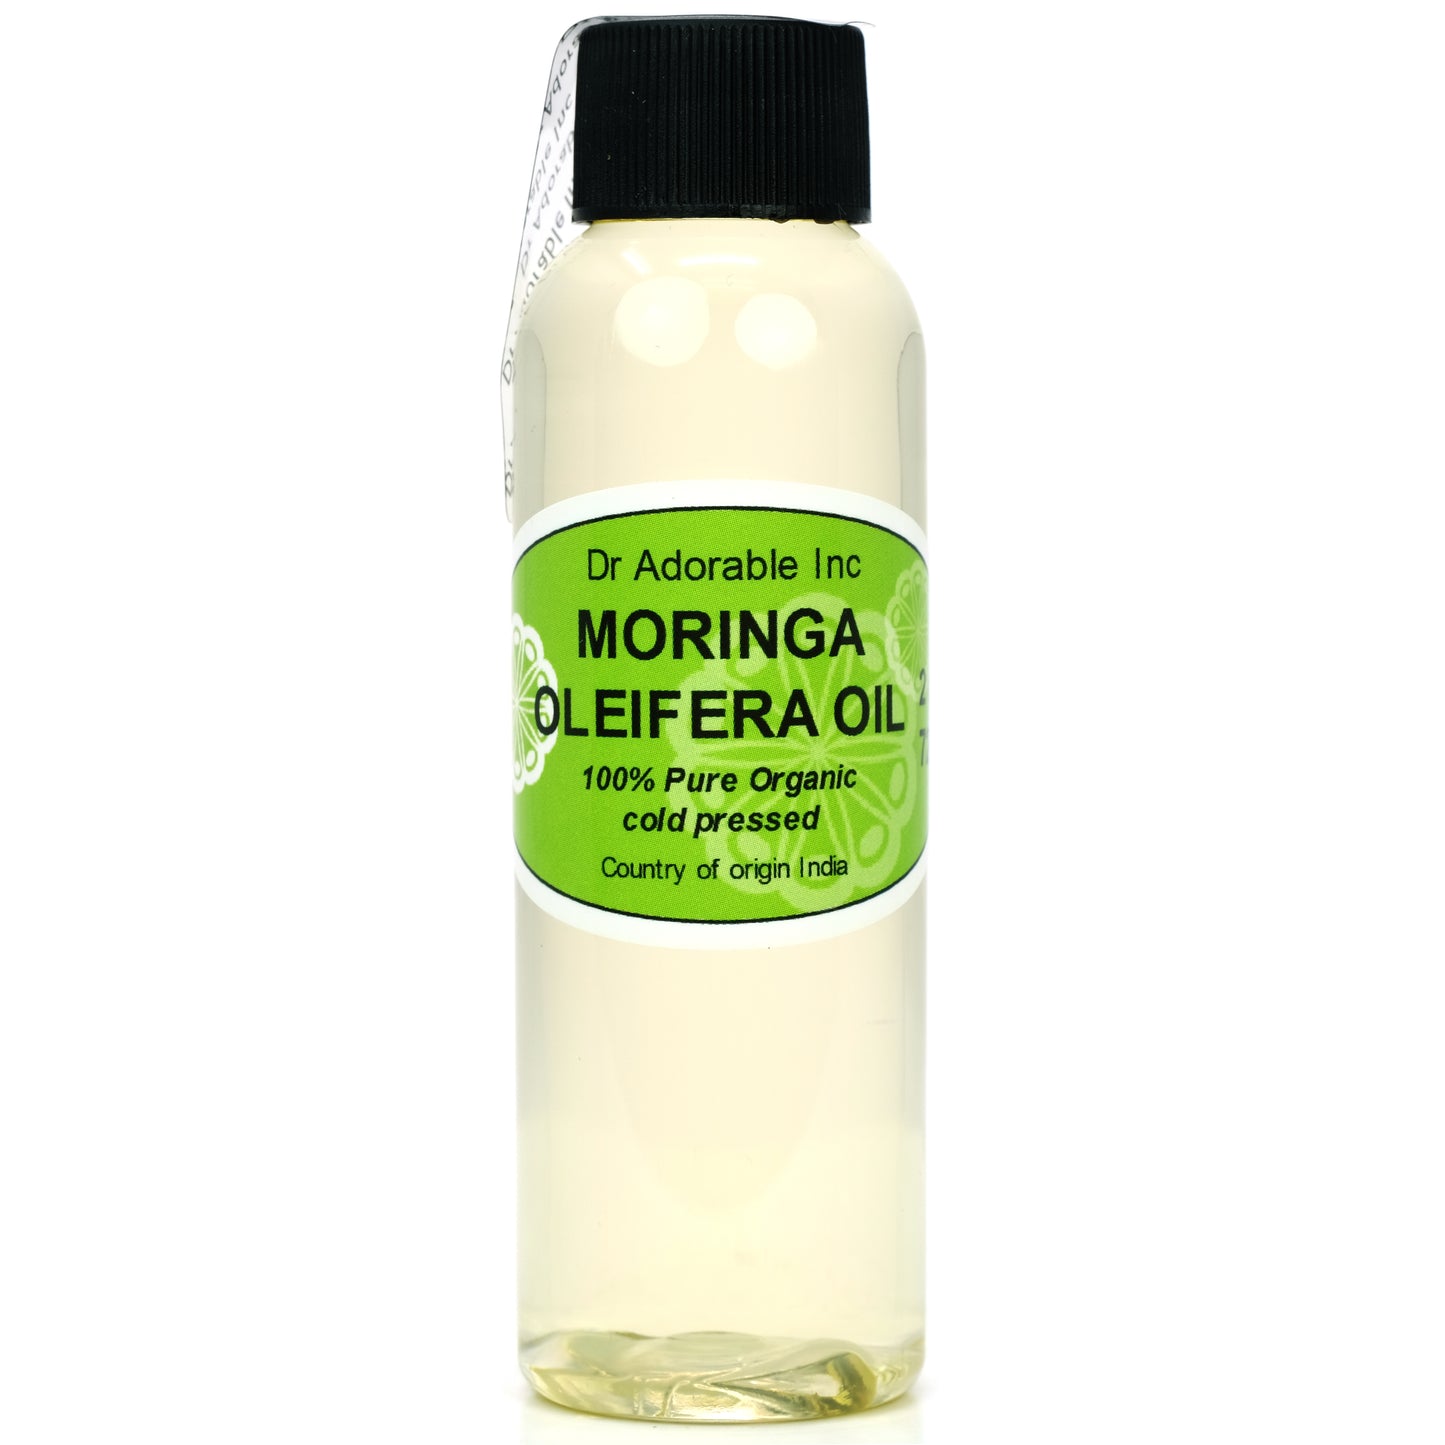 Moringa Oleifera Oil - 100% Pure Organic Natural Cold Pressed